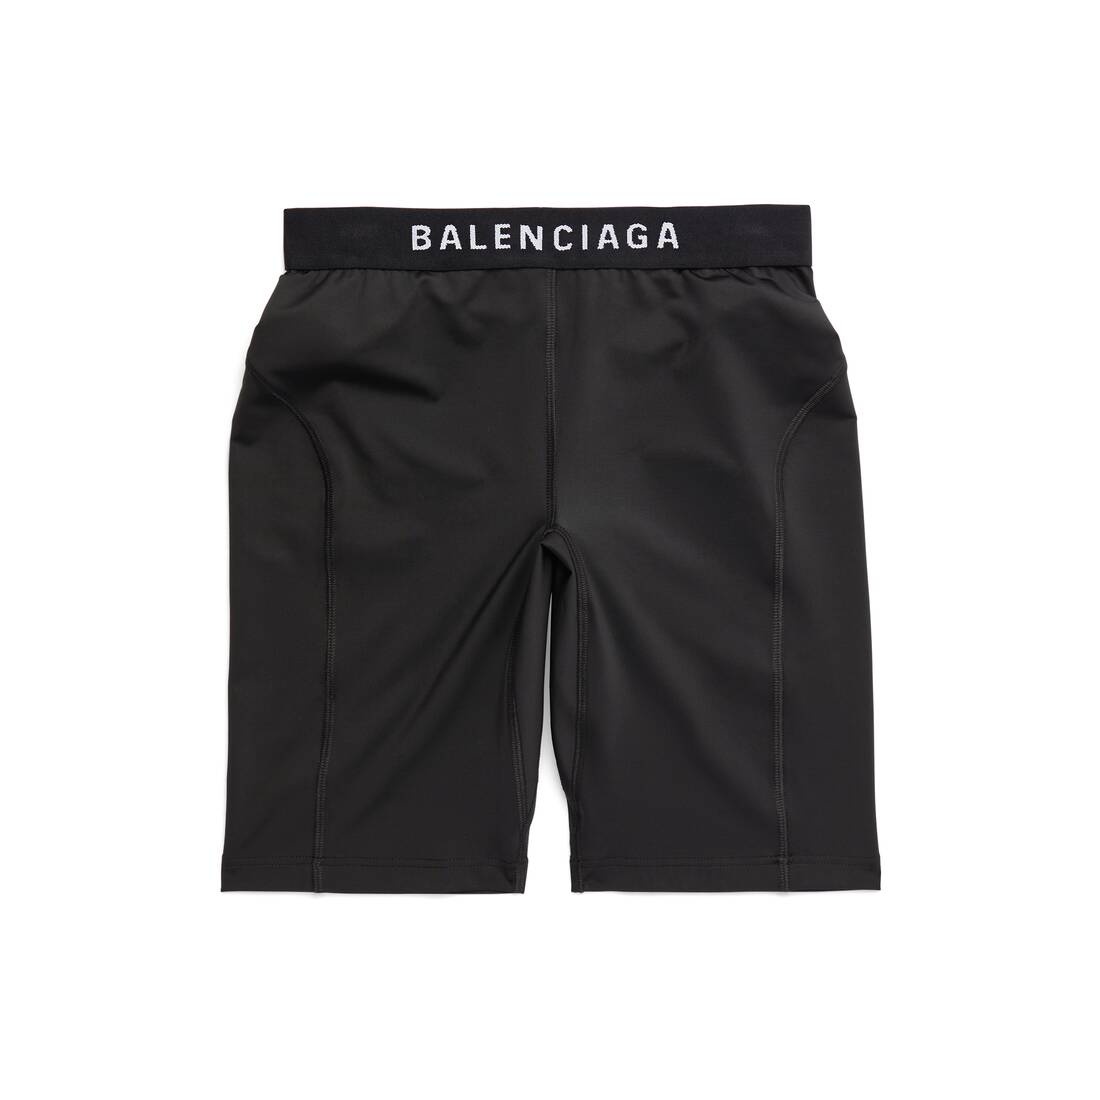 Women's Balenciaga Athletic Cycling Shorts in Black - 1